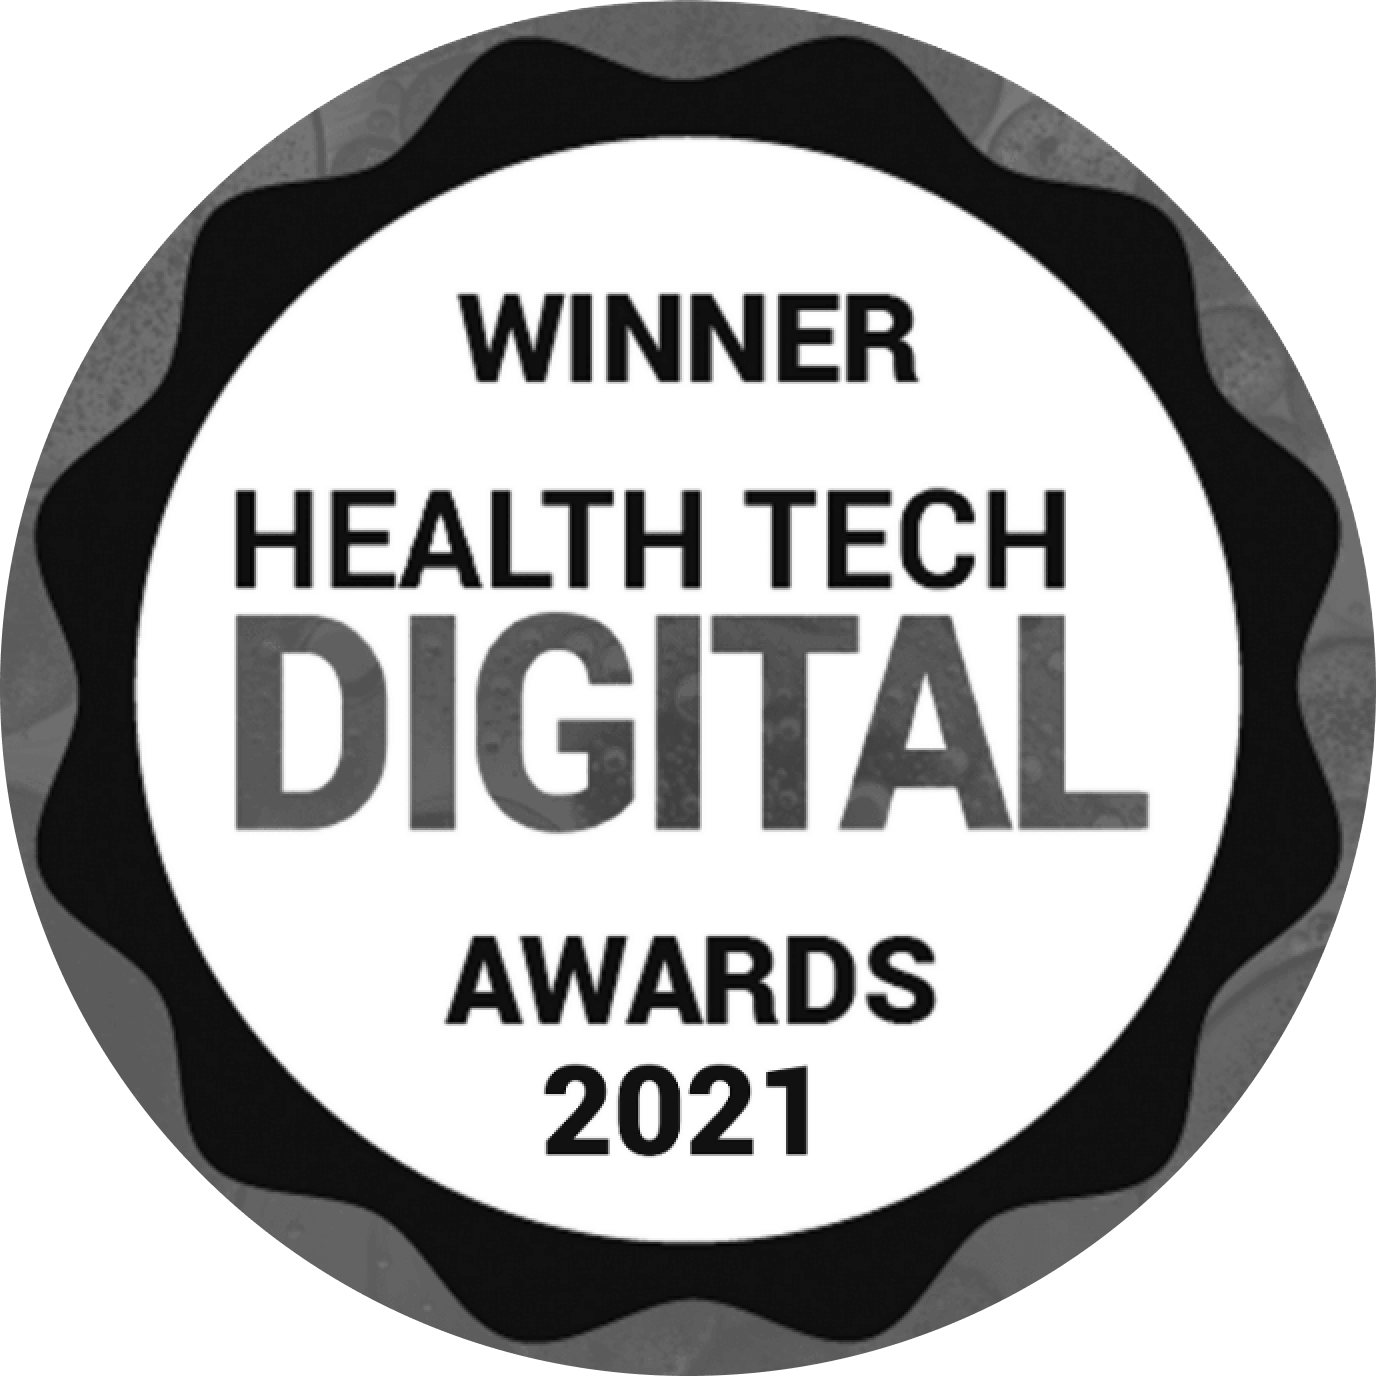 Health Tech Digital Awards Winner 2021